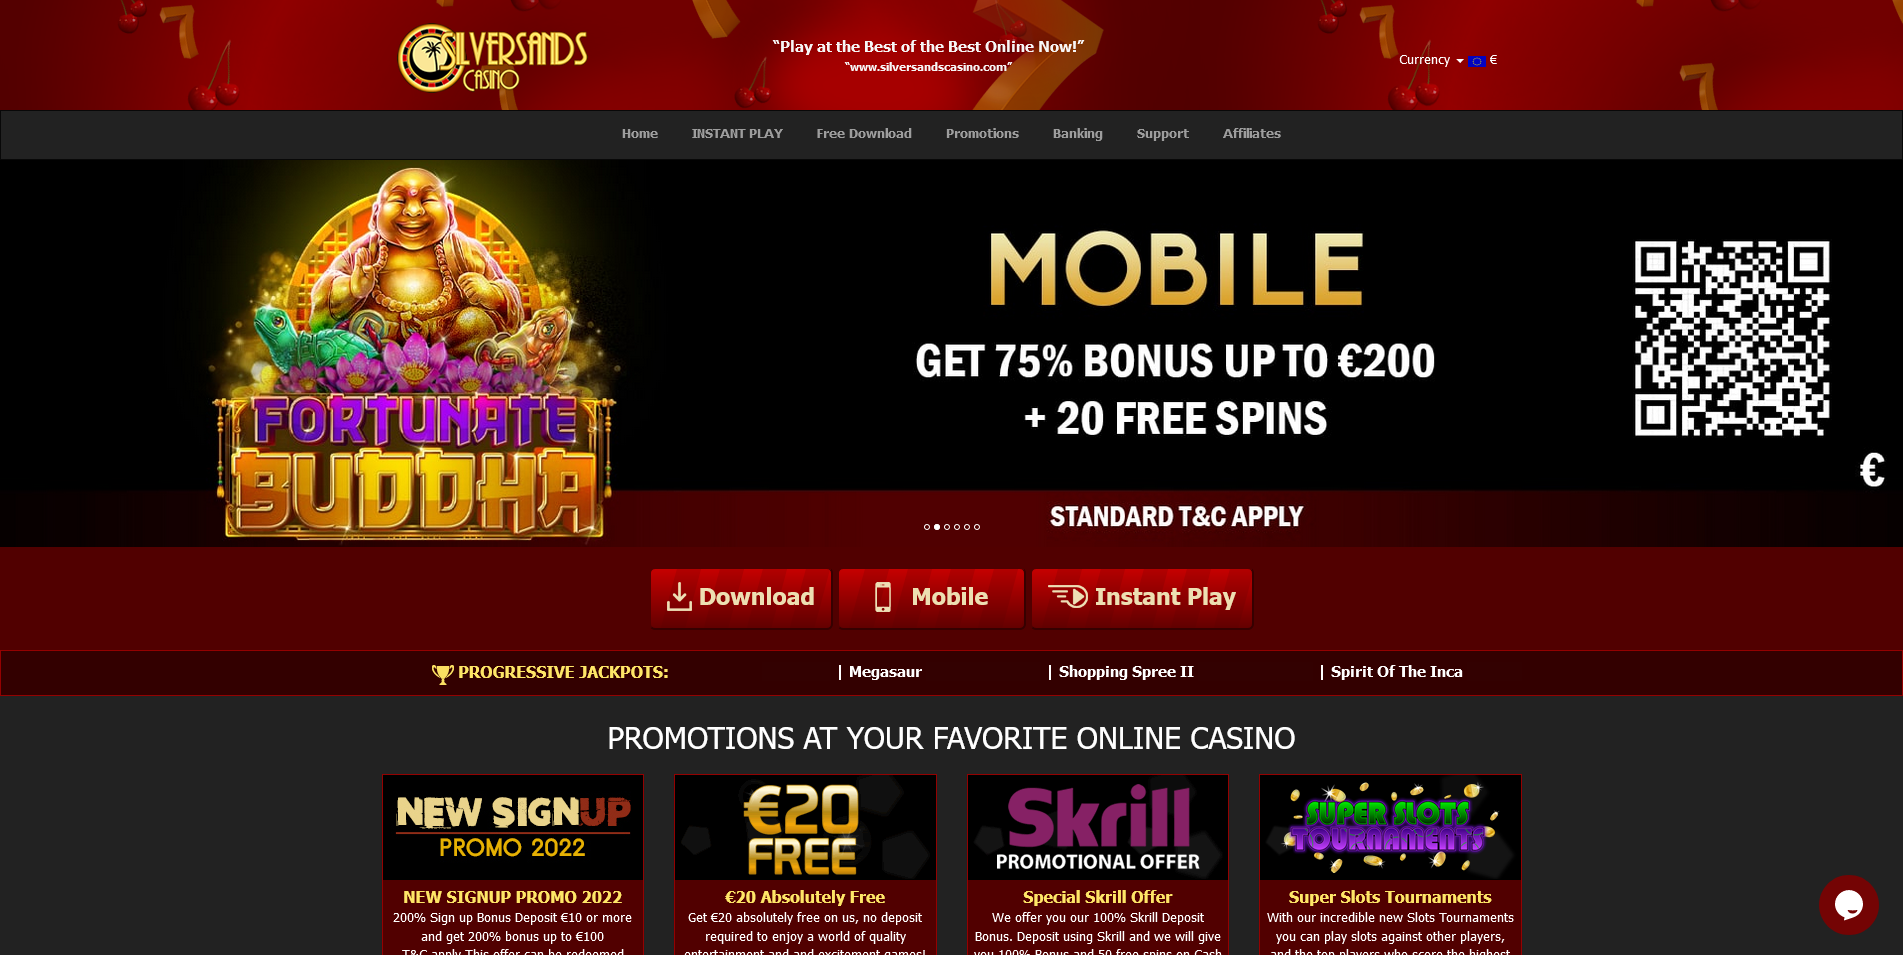 Screenshot of main Page on SilverSands Casino site